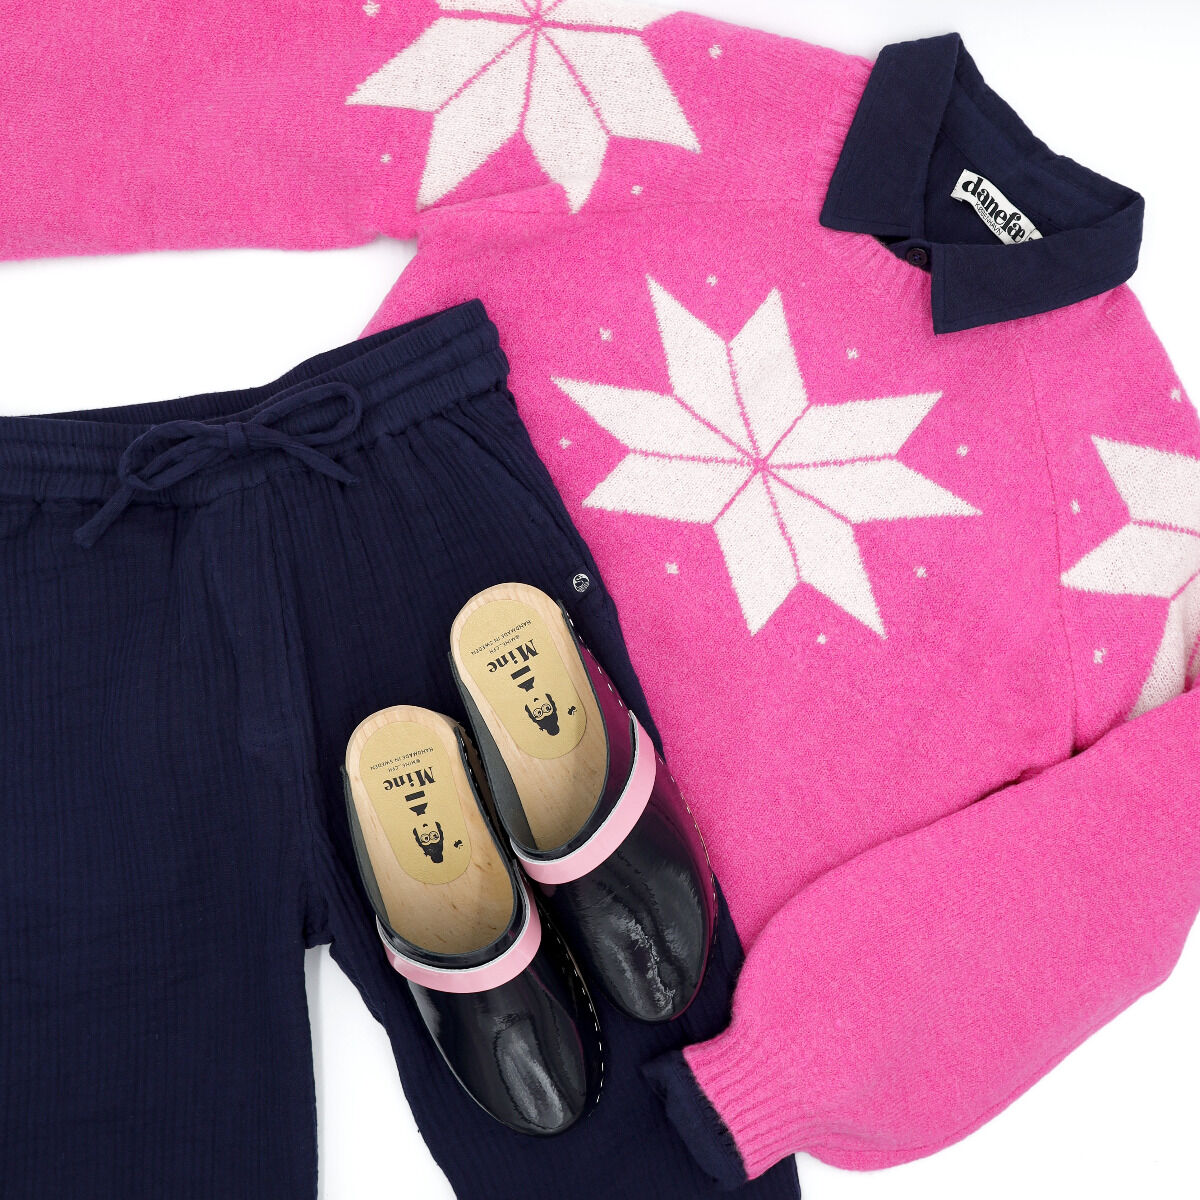 Danefantastic Flakes Light Wool Sweater Neon Pink/Rose Beige